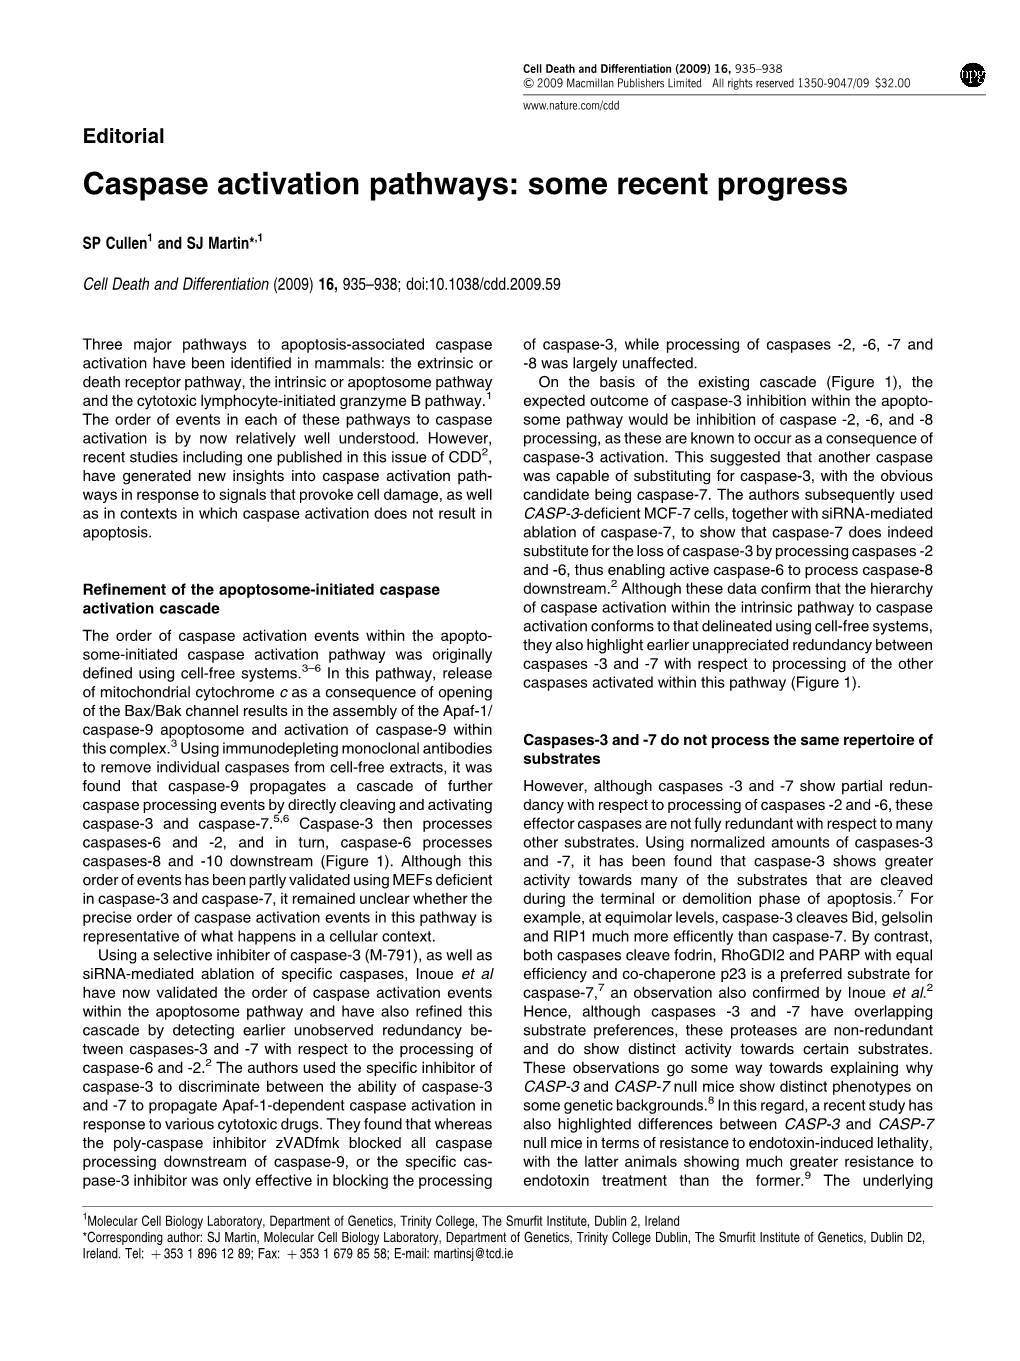 Caspase Activation Pathways: Some Recent Progress